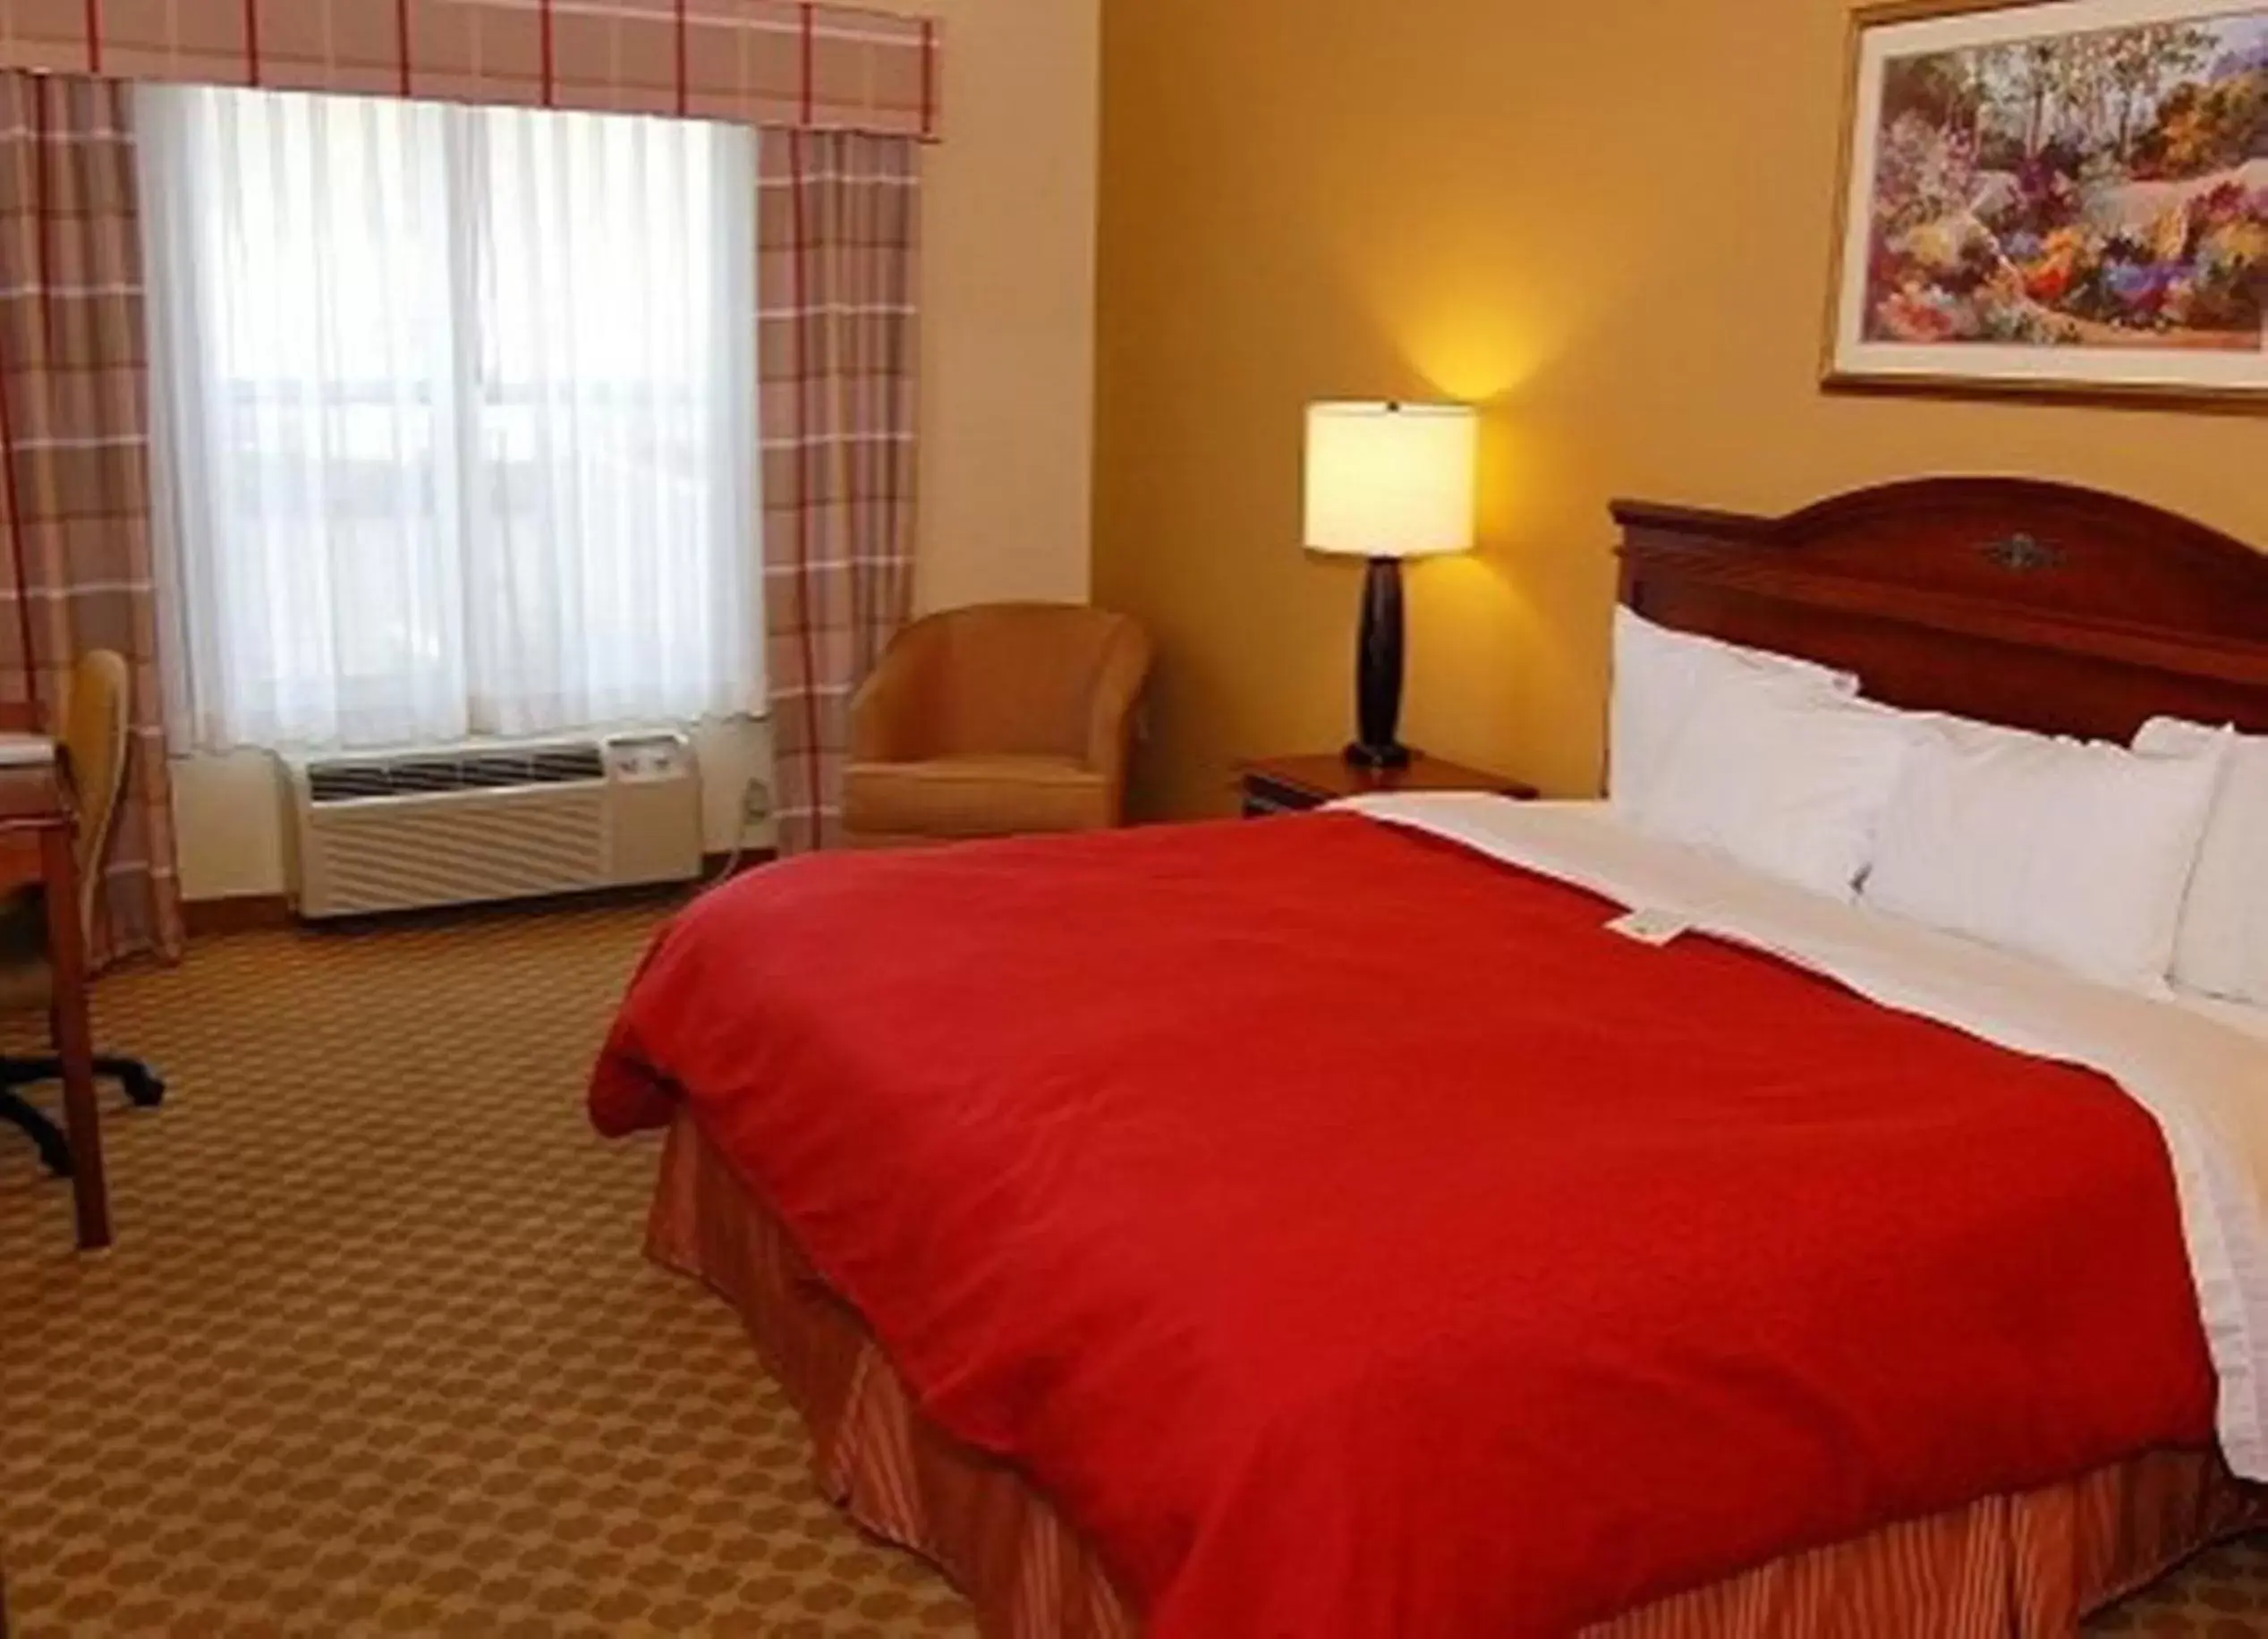 Bed in Country Inn & Suites by Radisson, Frackville (Pottsville), PA